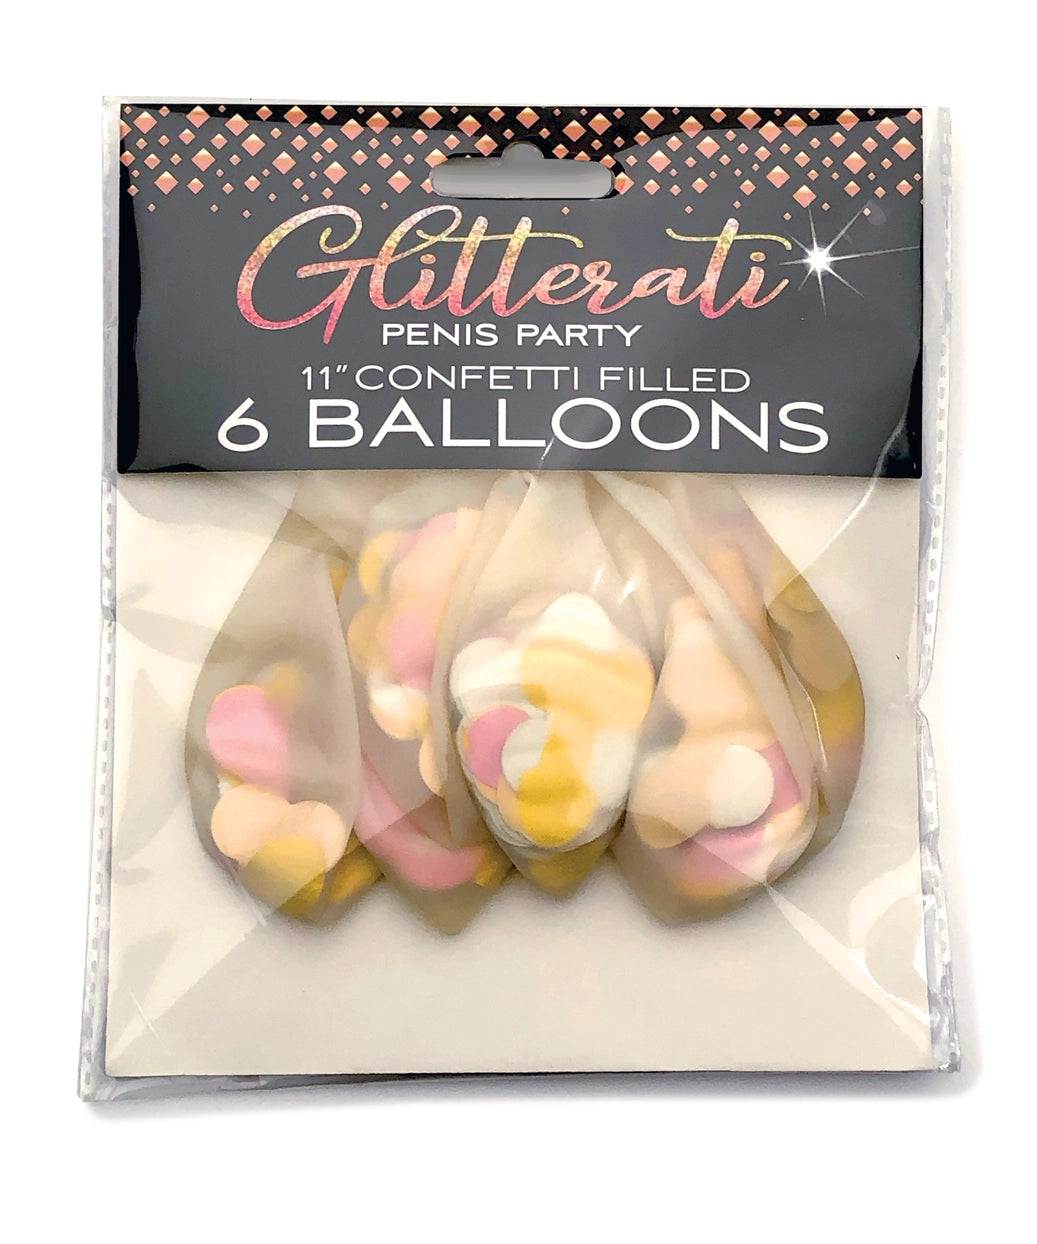 Glitterati Penis Party Balloons